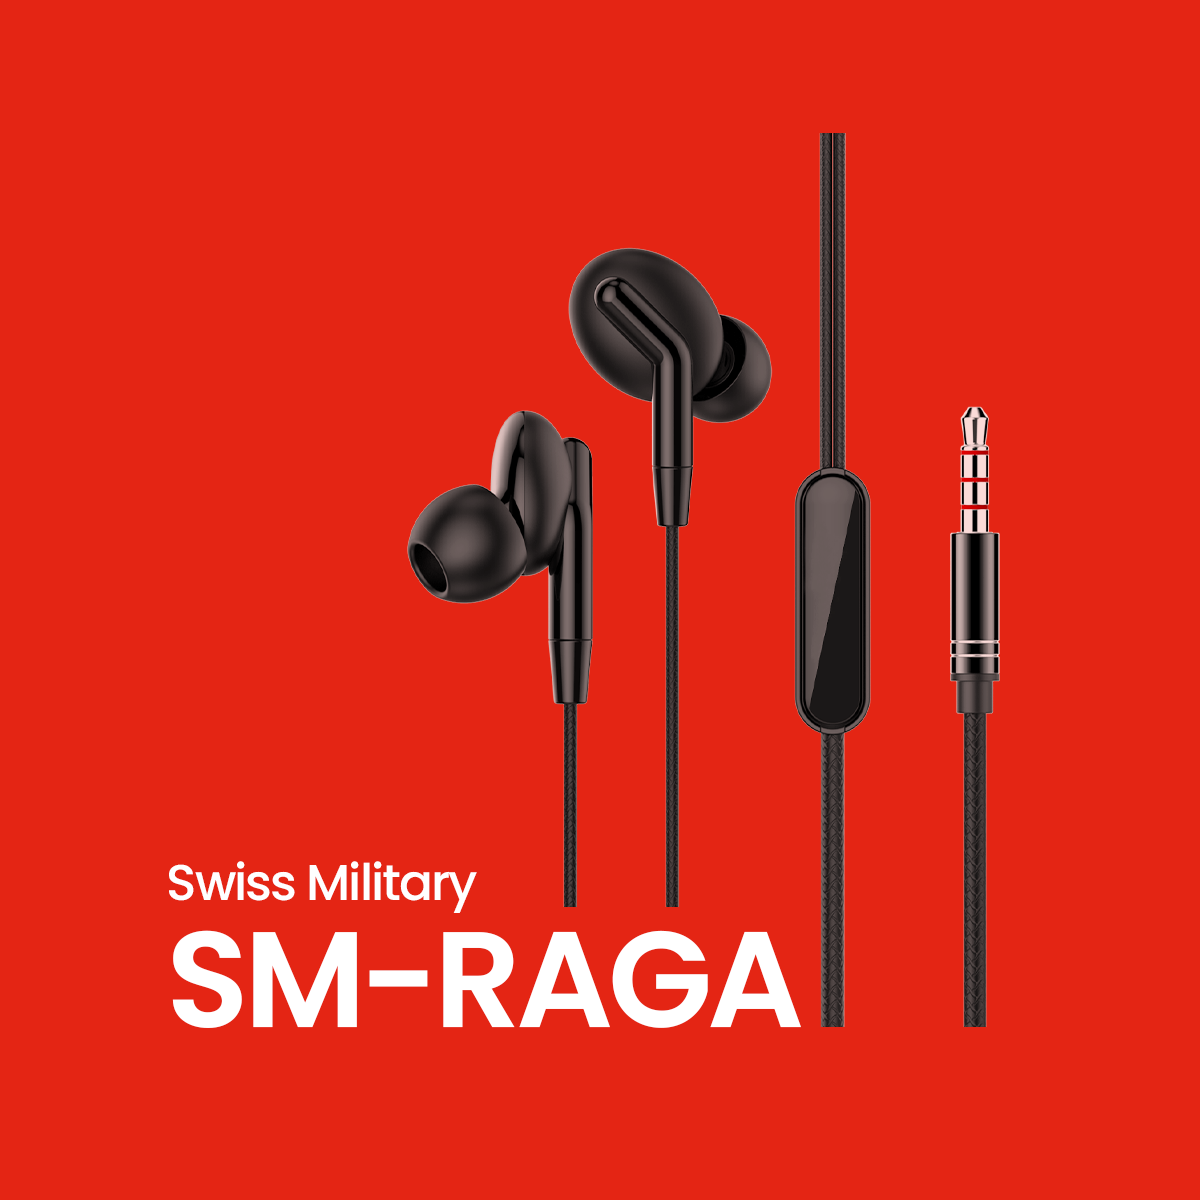 SM-RAGA - STYLISH LOOKS & POWERFUL BASS EARPHONES